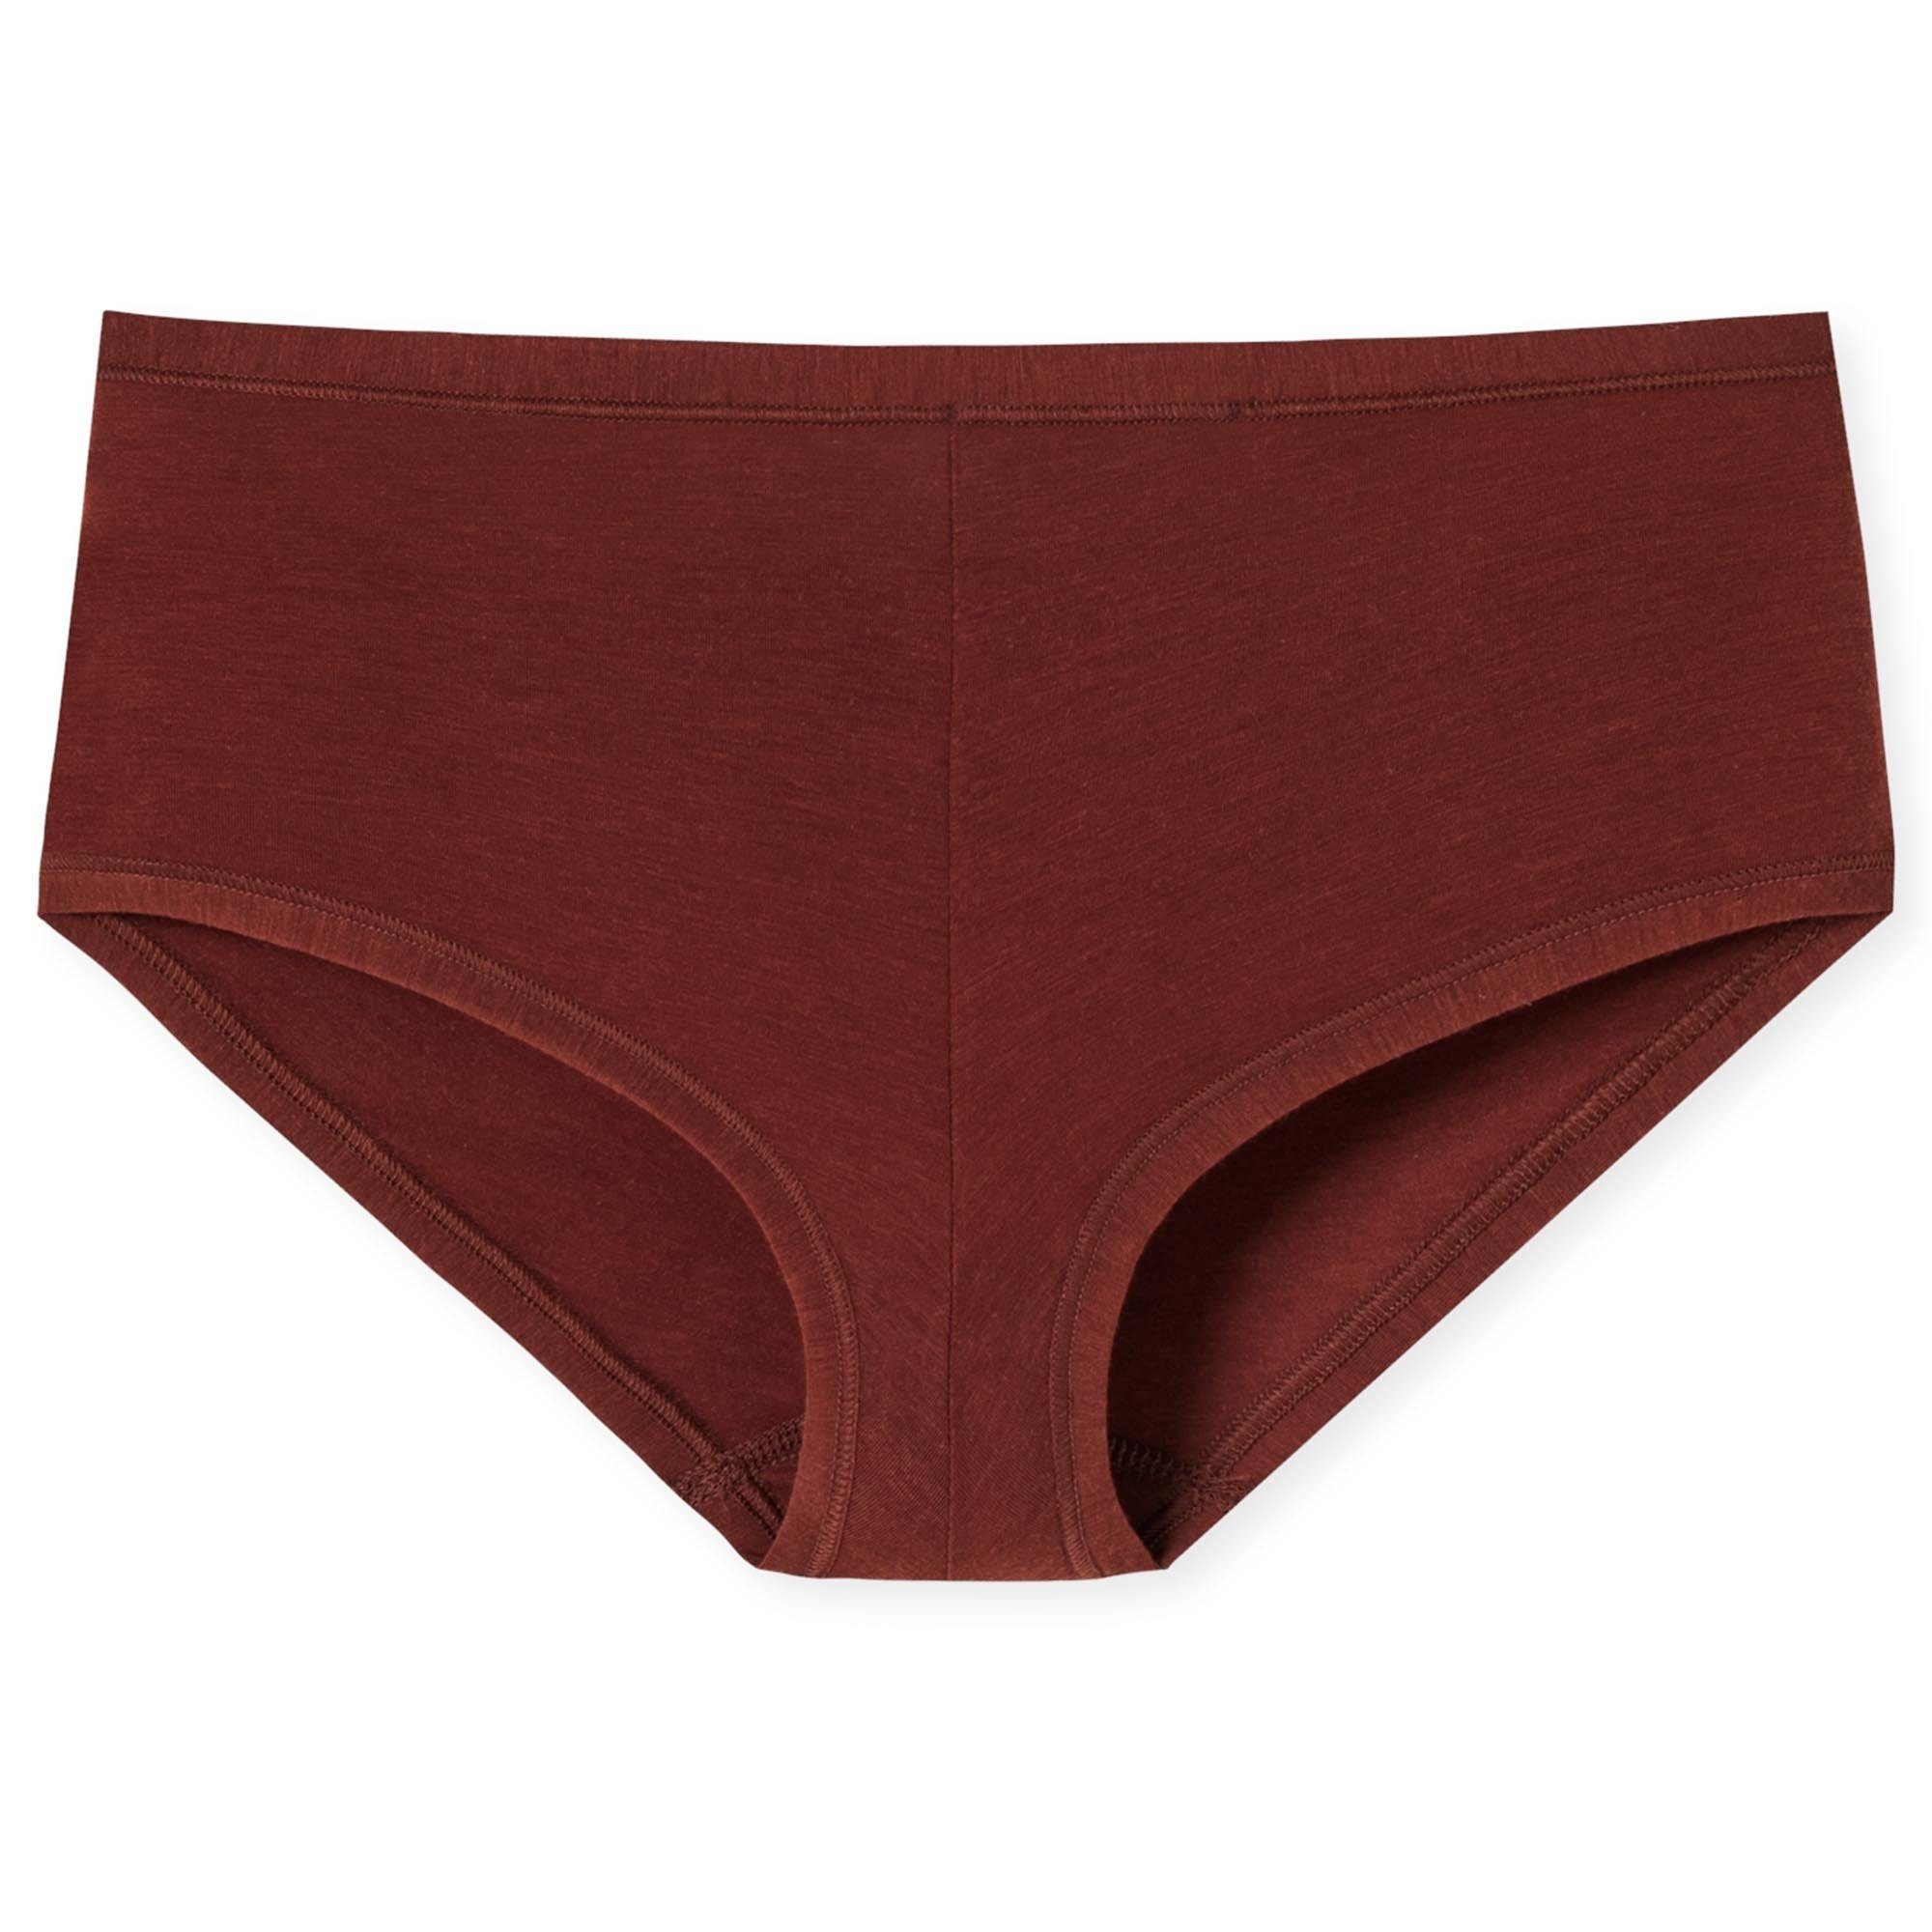 Personal Schiesser Terracotta Shorts Pants, Slip, - Damen Unterhose, Panty